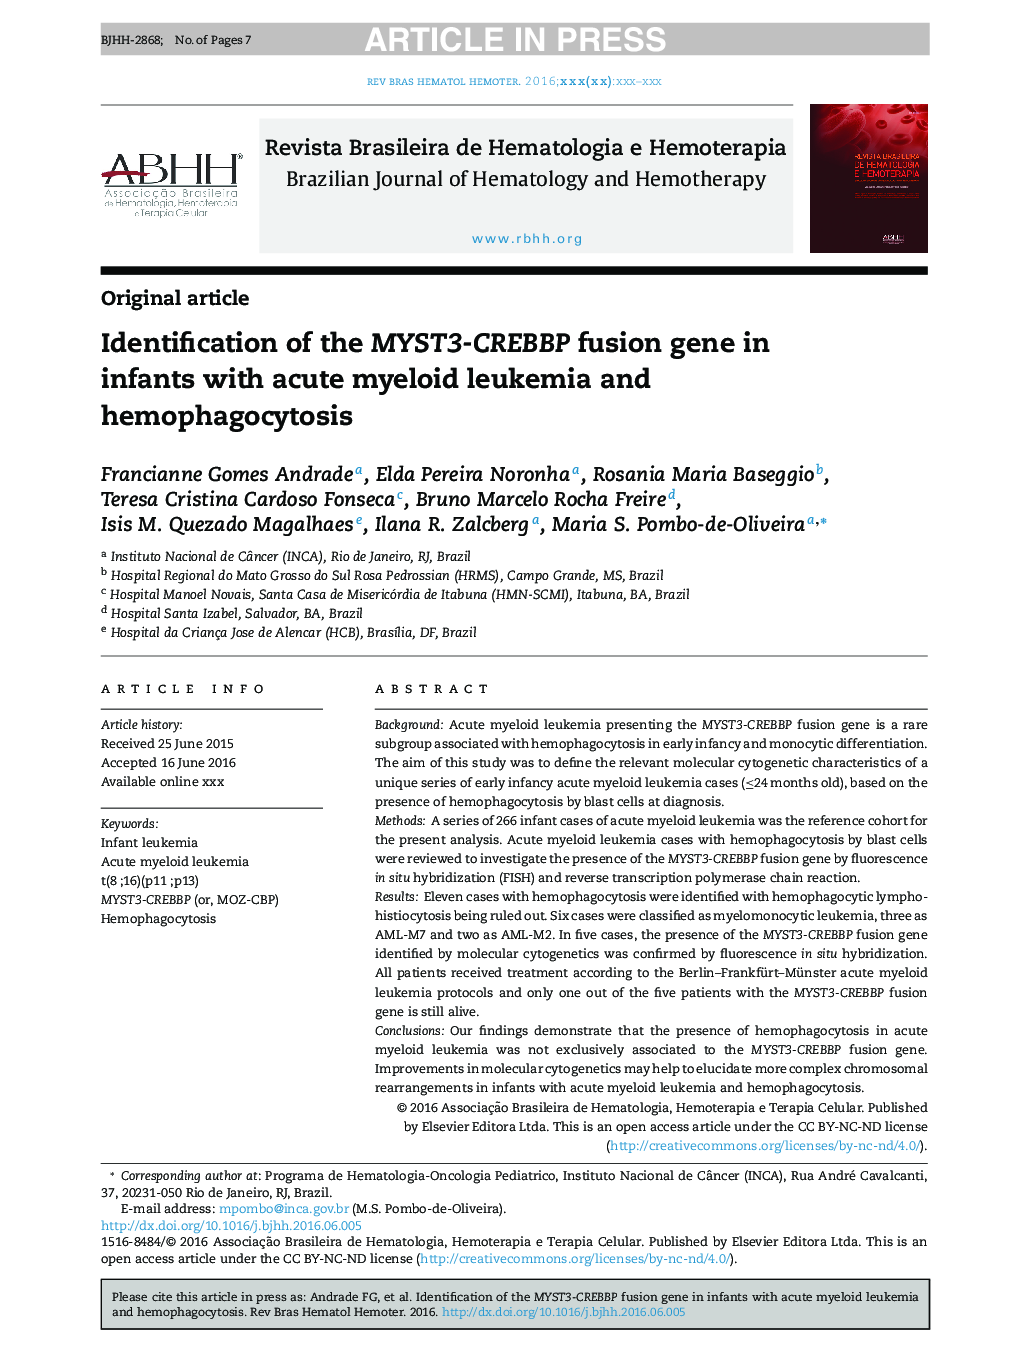 Identification of the MYST3-CREBBP fusion gene in infants with acute myeloid leukemia and hemophagocytosis